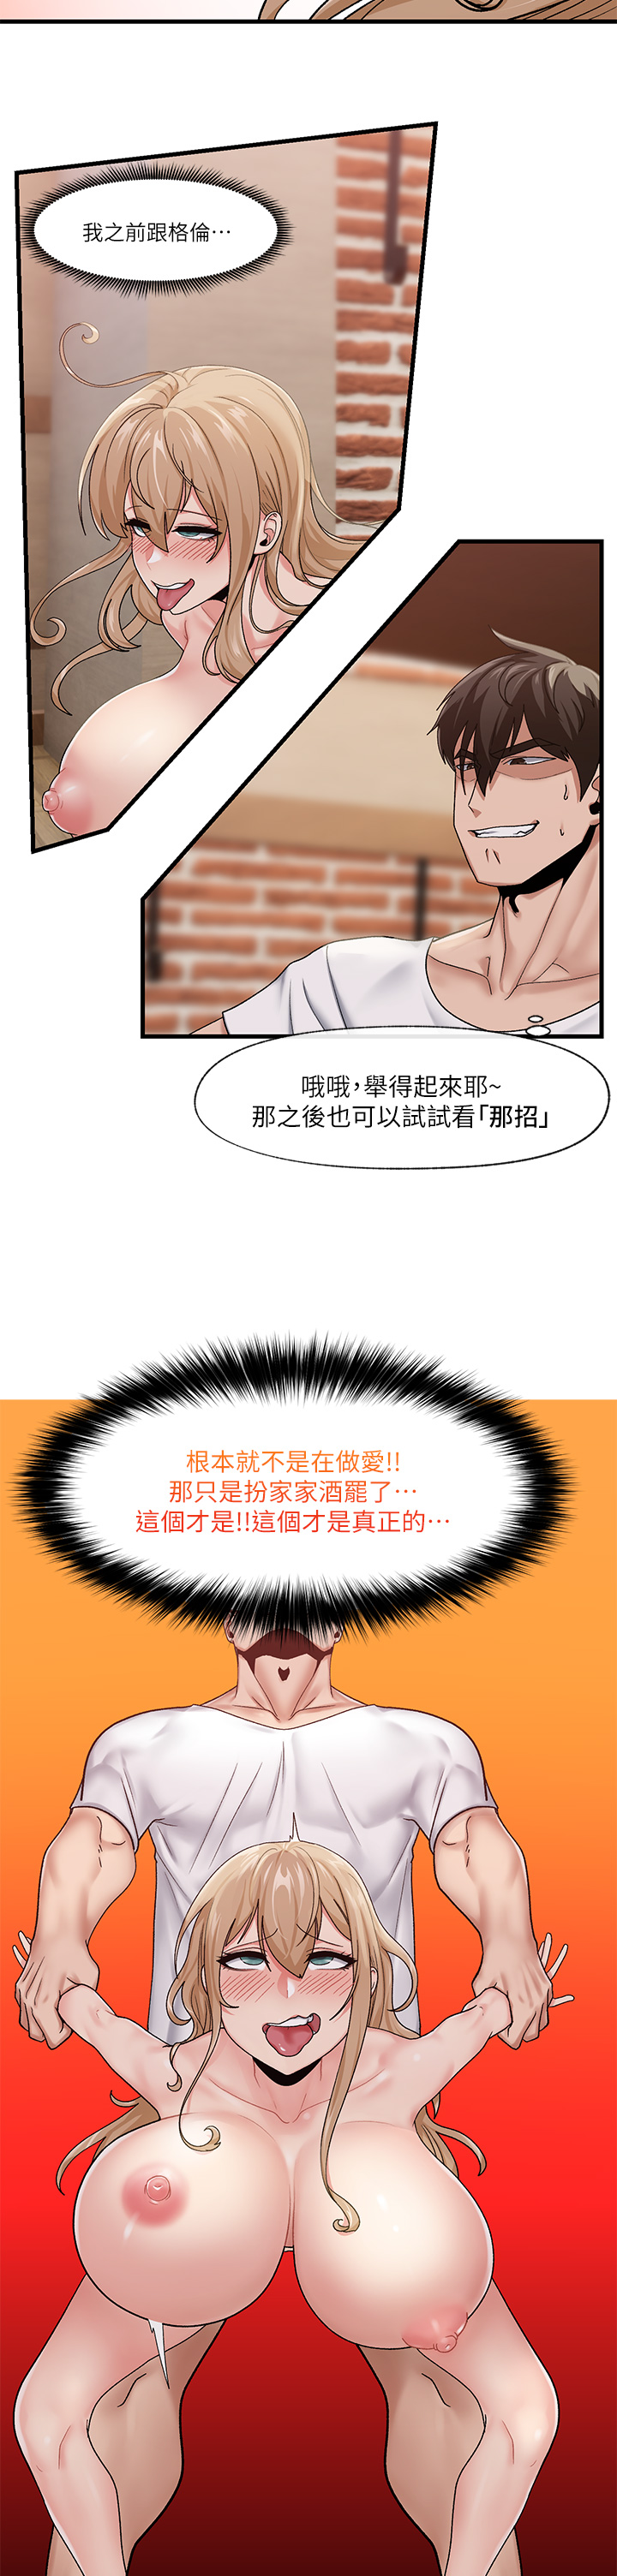 King of hypnotist in Isekai (13-14)-chinese 異世界催眠王 13-14話-chinese